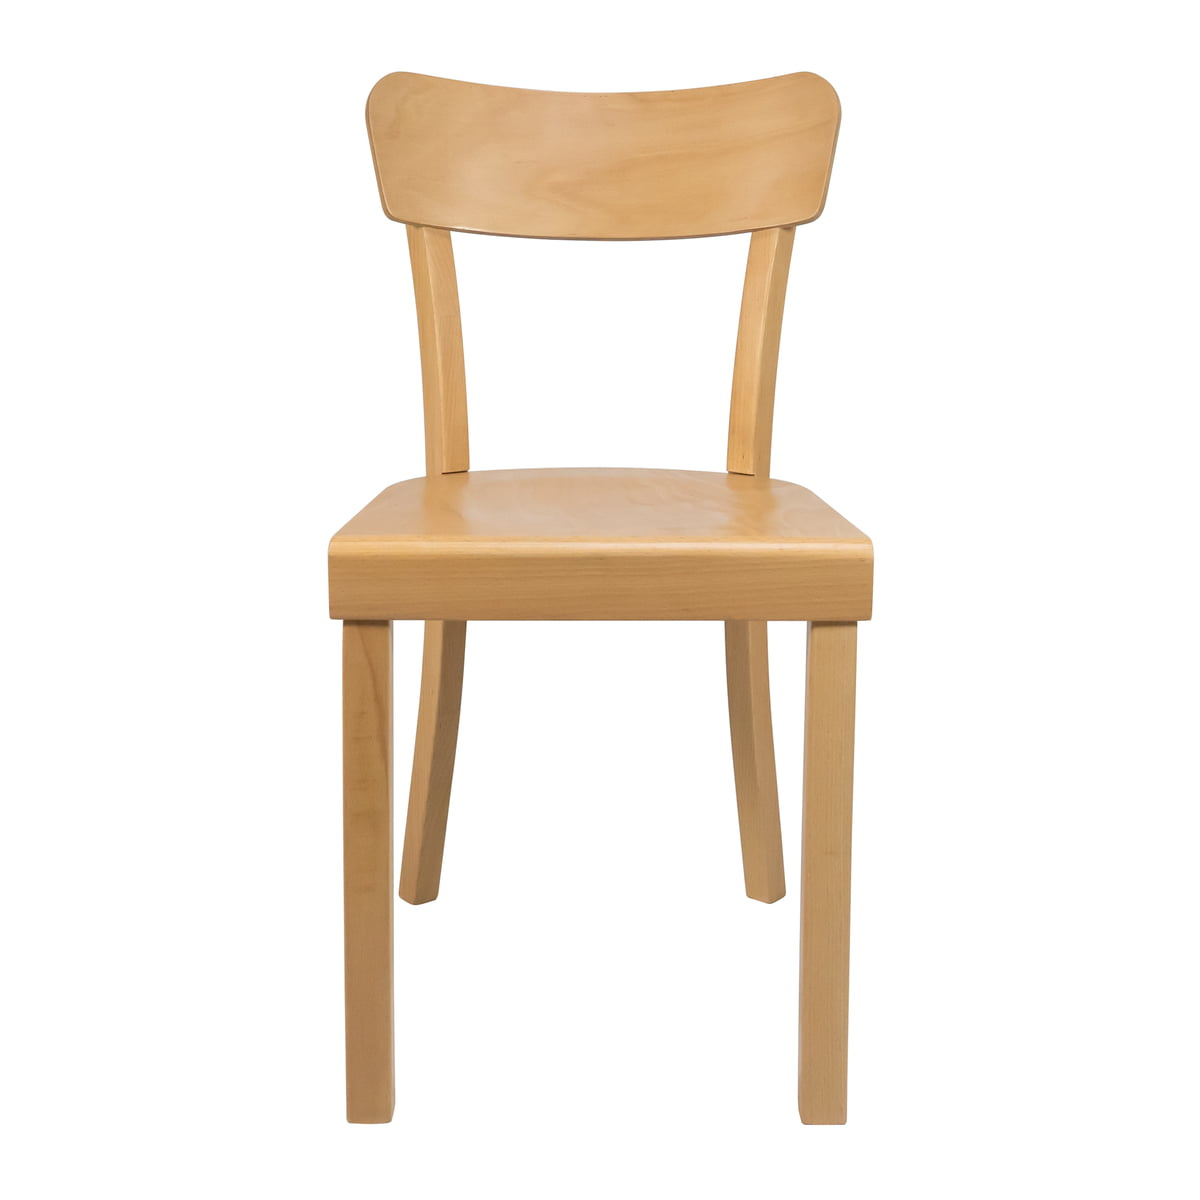 HANA - Frankfurter Stuhl 2.0 - Buche/geölt/BxHxT 44x82x49cm/max. 110kg belastbar von HANA